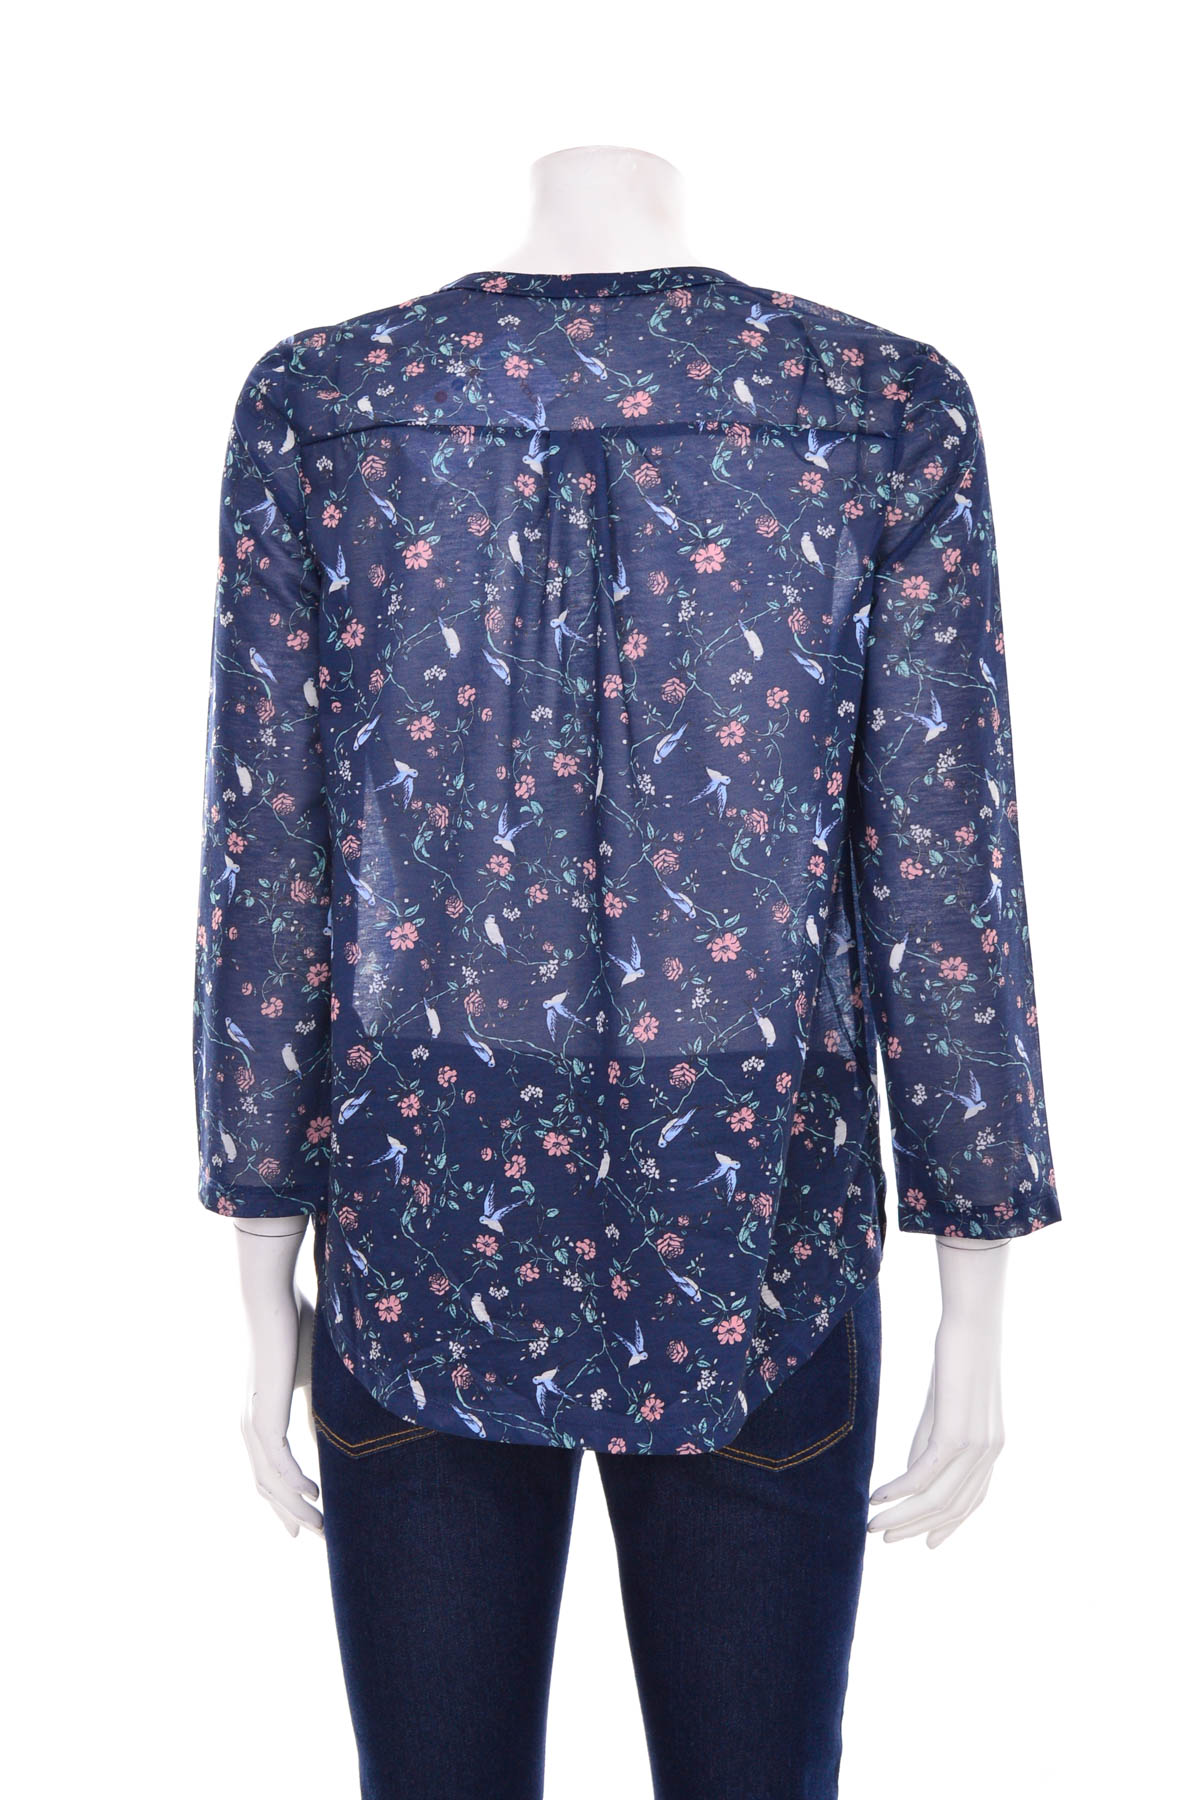 Women's blouse - H&M - 1